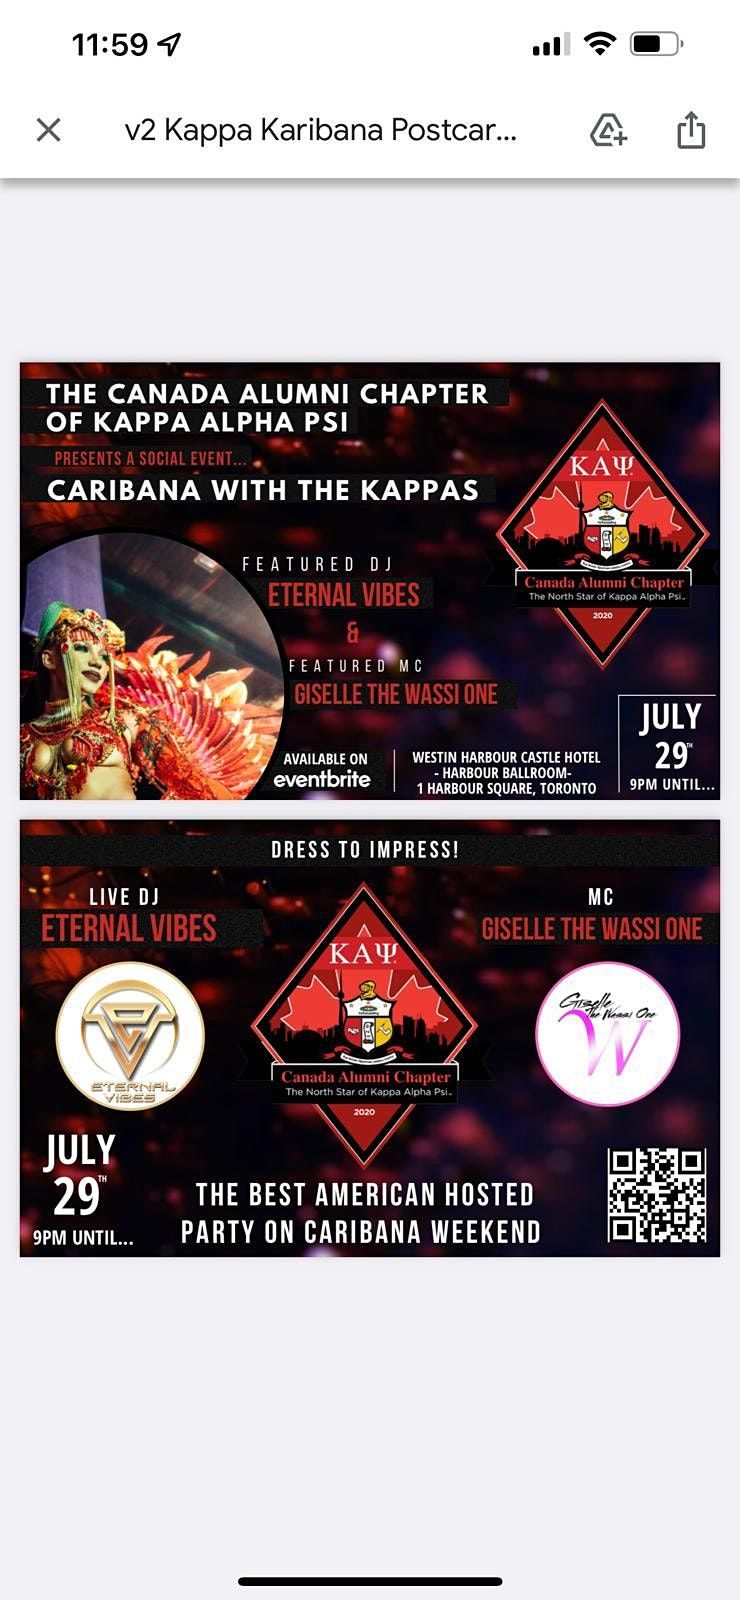 Kappa Alpha Psi - Canada Alumni Chartering Celebration- Caribana